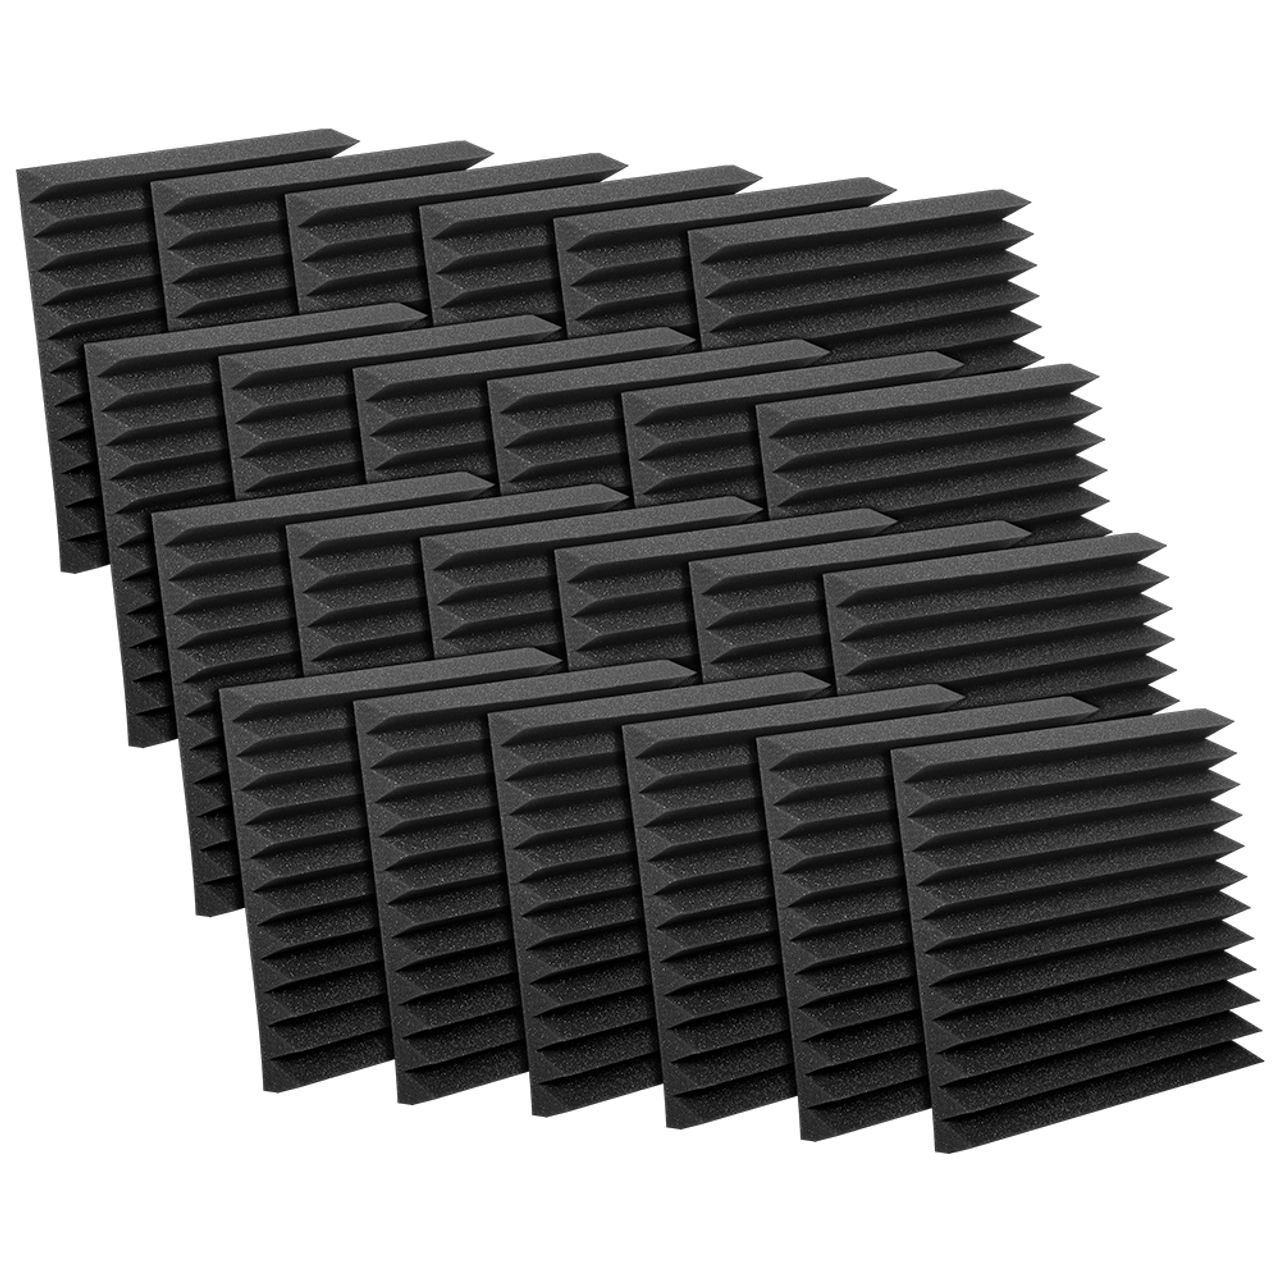 SoundAssured White Acoustic Foam 2x12x12 inch Panels - 4 Pack